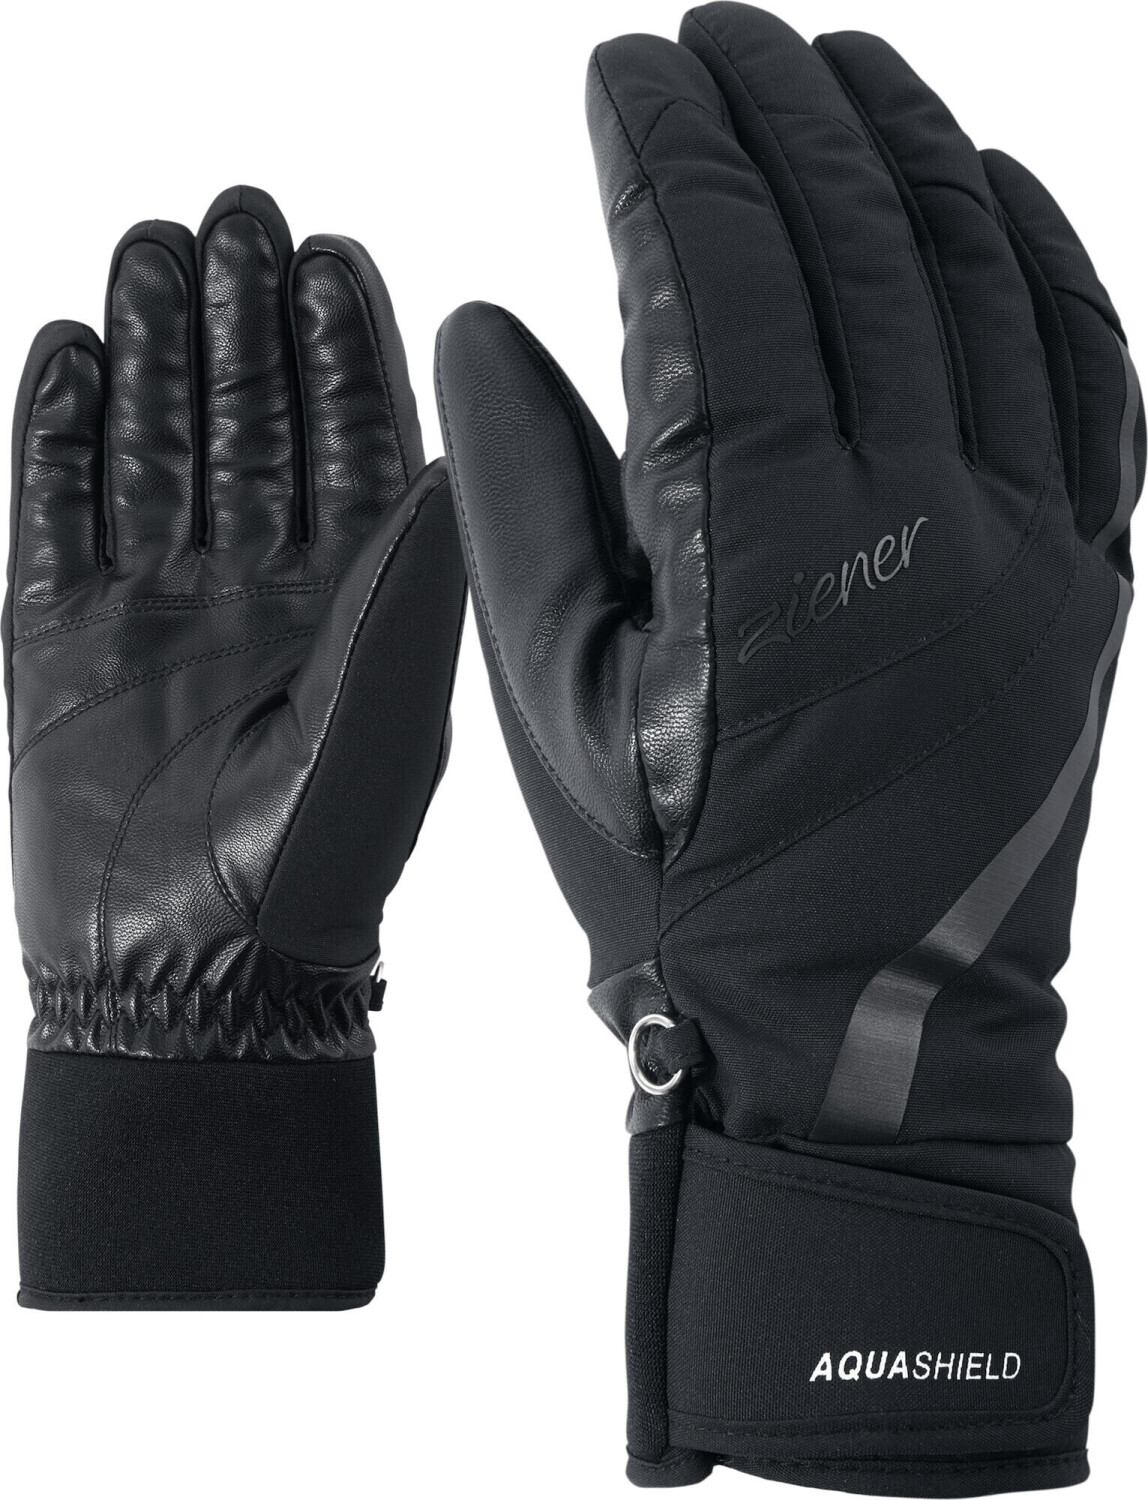 Photos - Ski Wear Ziener Kitty ASR Lady Glove black 